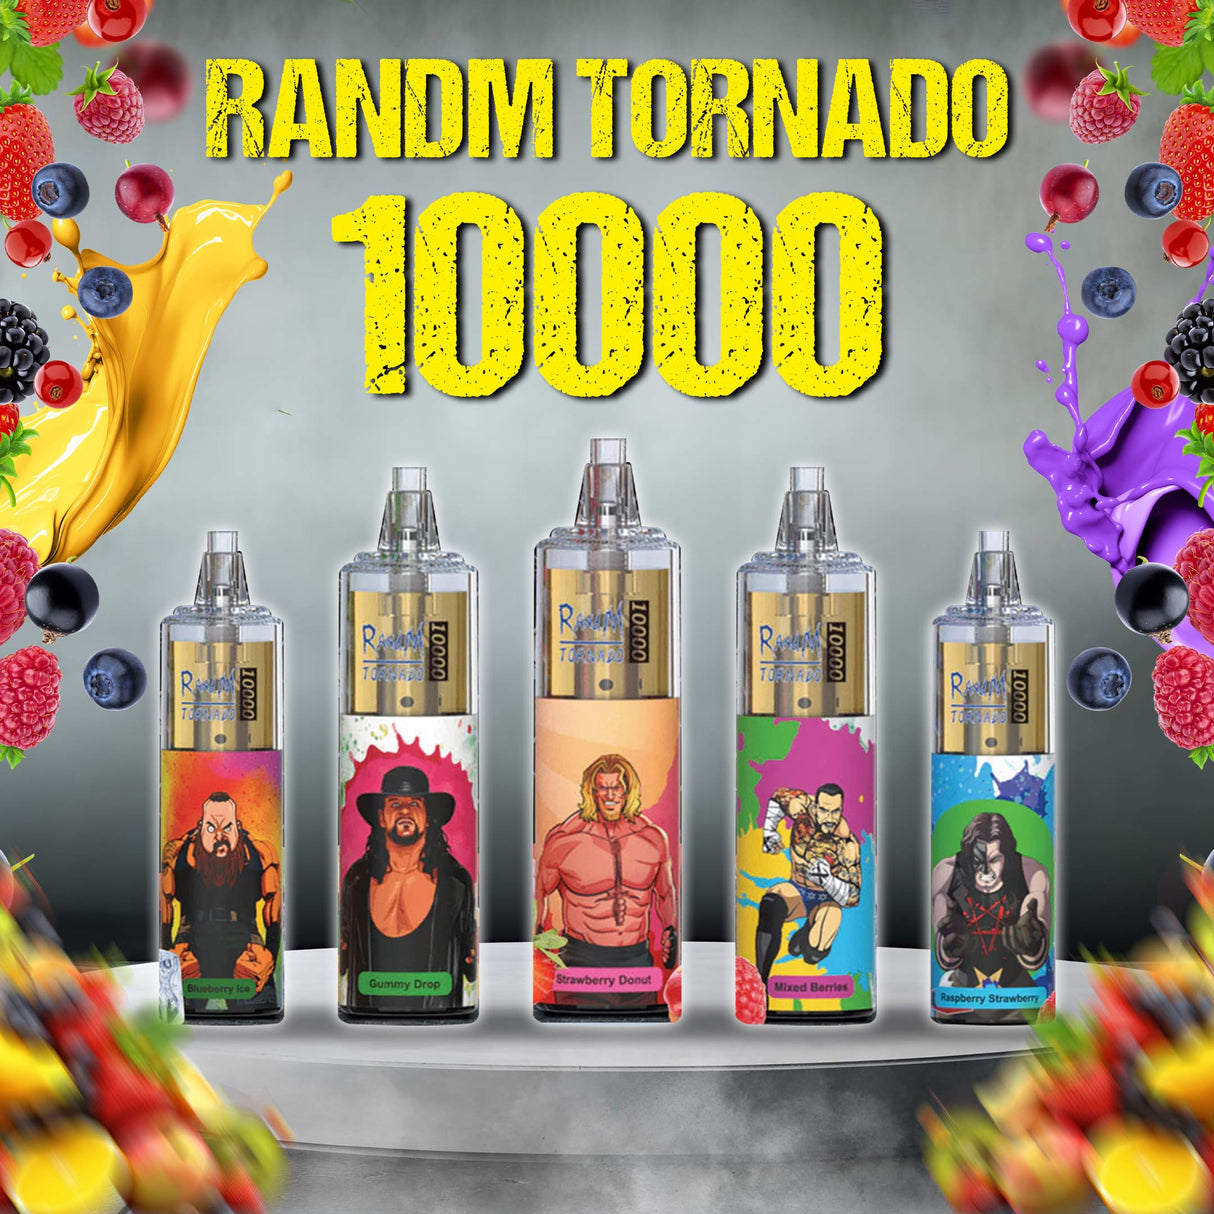 RANDM TORNADO 10000